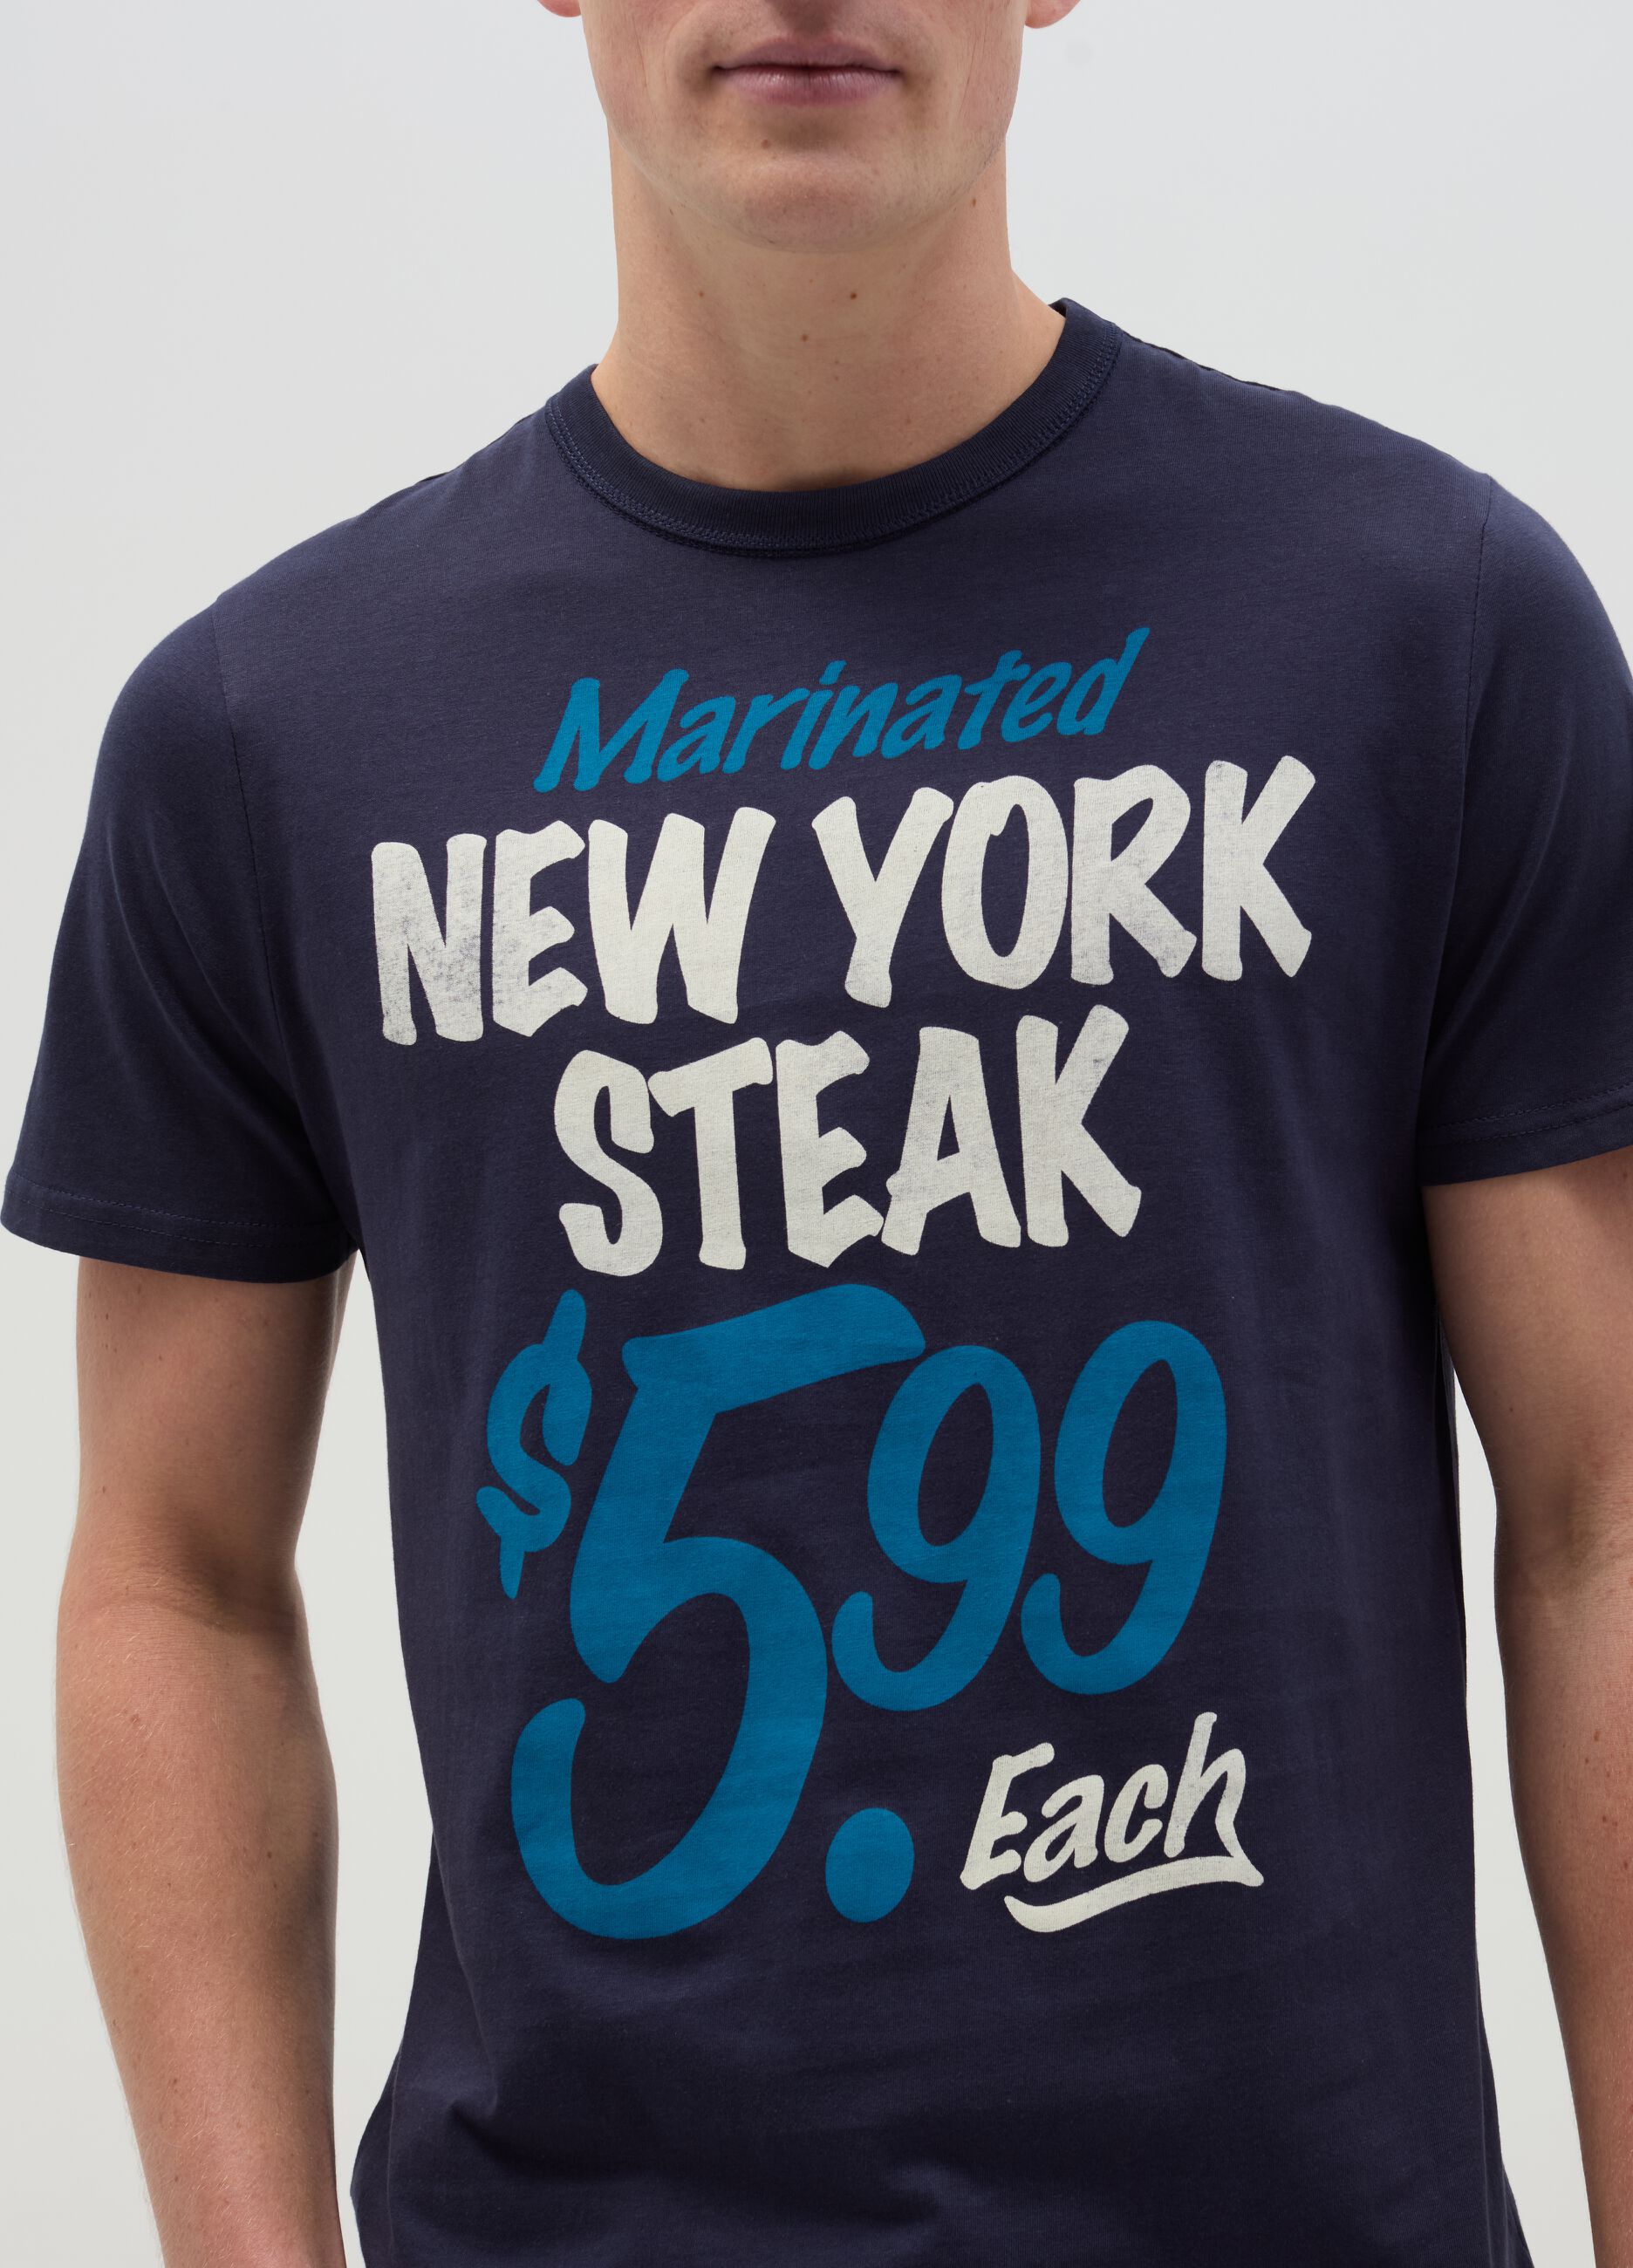 T-shirt with New York Steak print